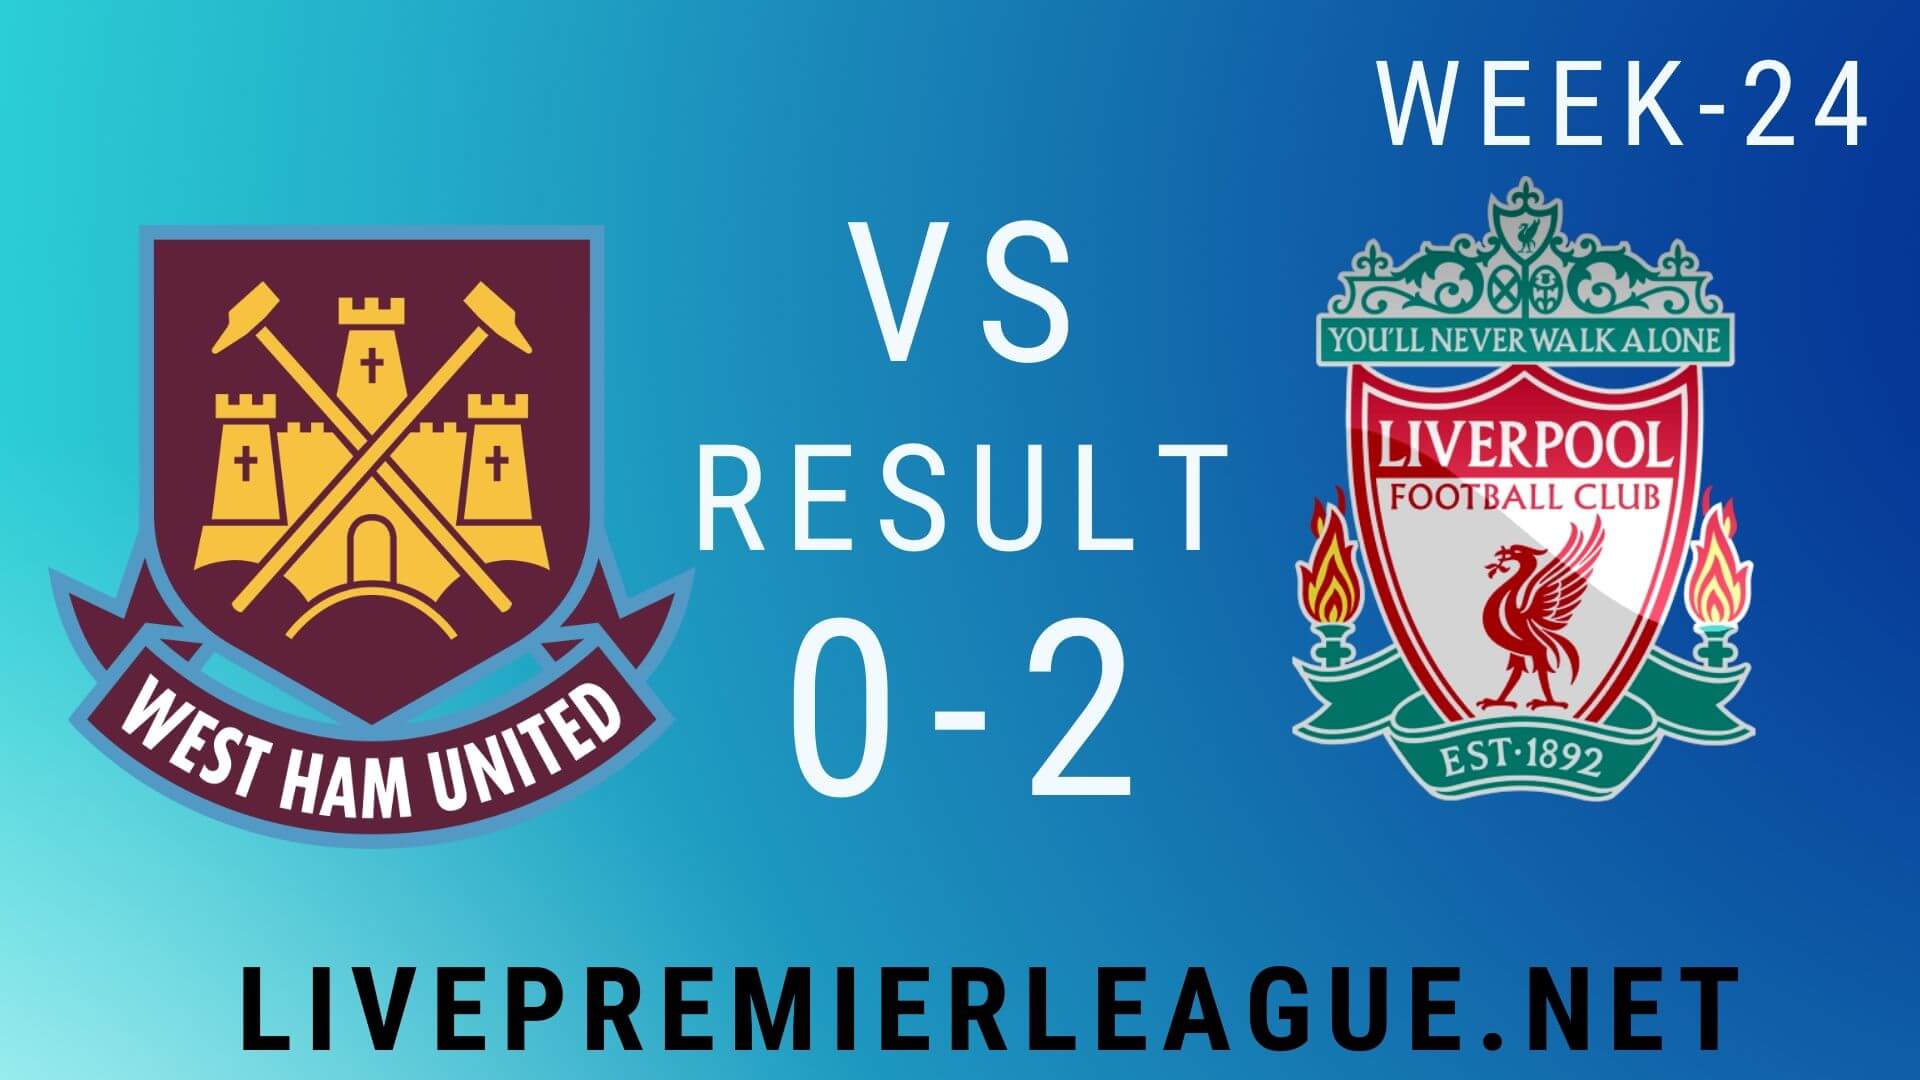 West Ham United Vs Liverpool | Week 24 Result 2020